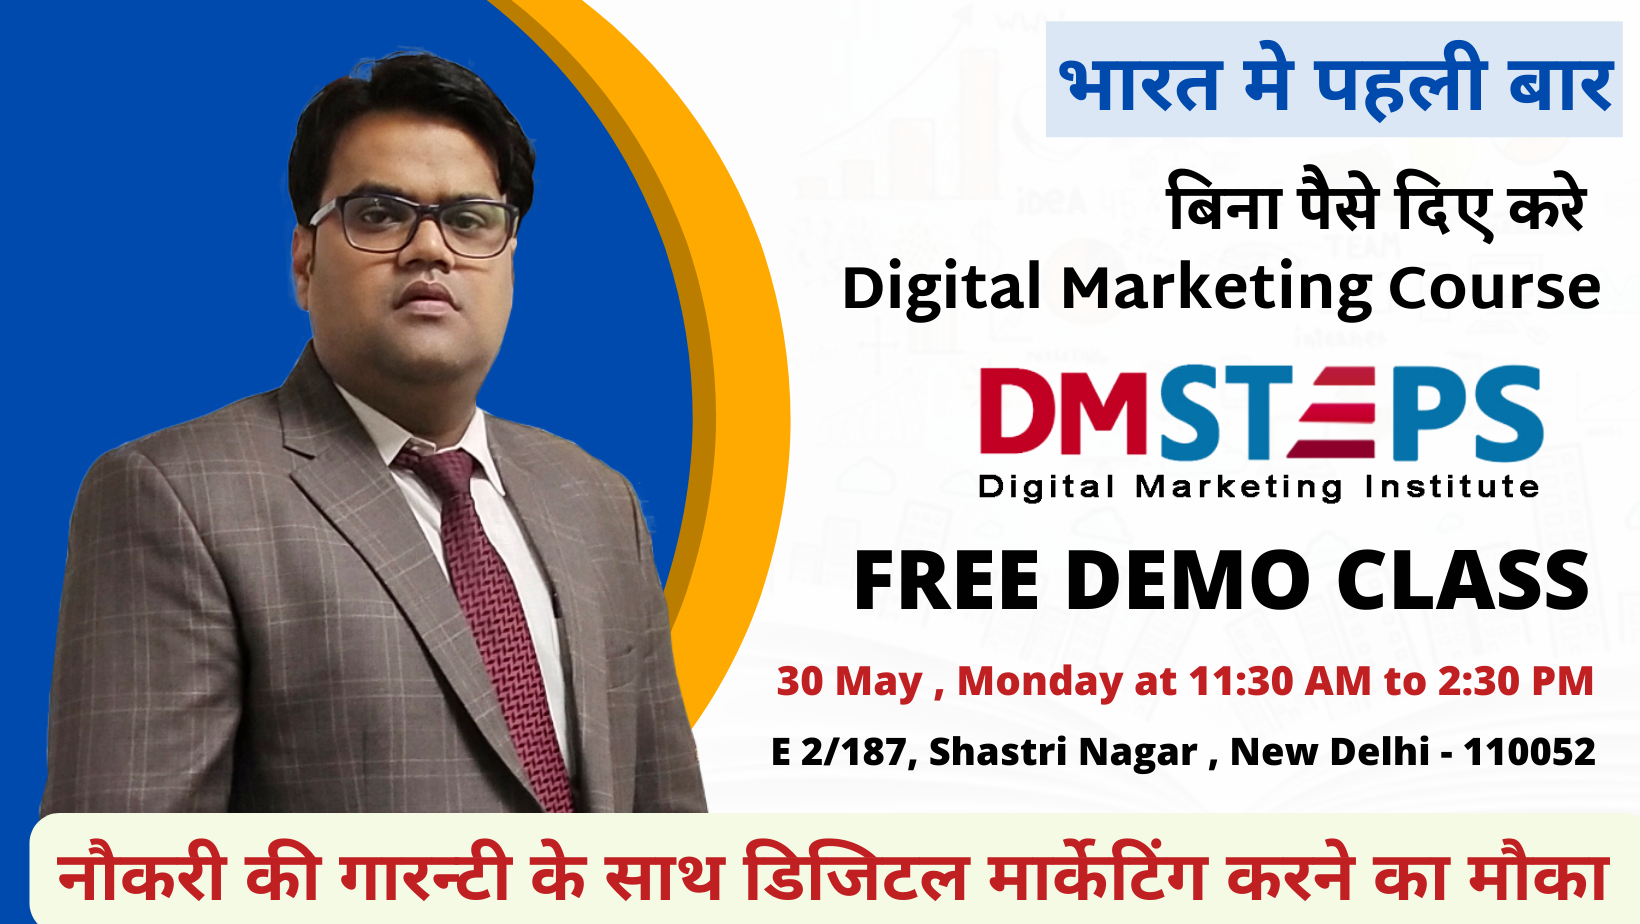 Free Digital Marketing Course Demo Class, New Delhi, Delhi, India